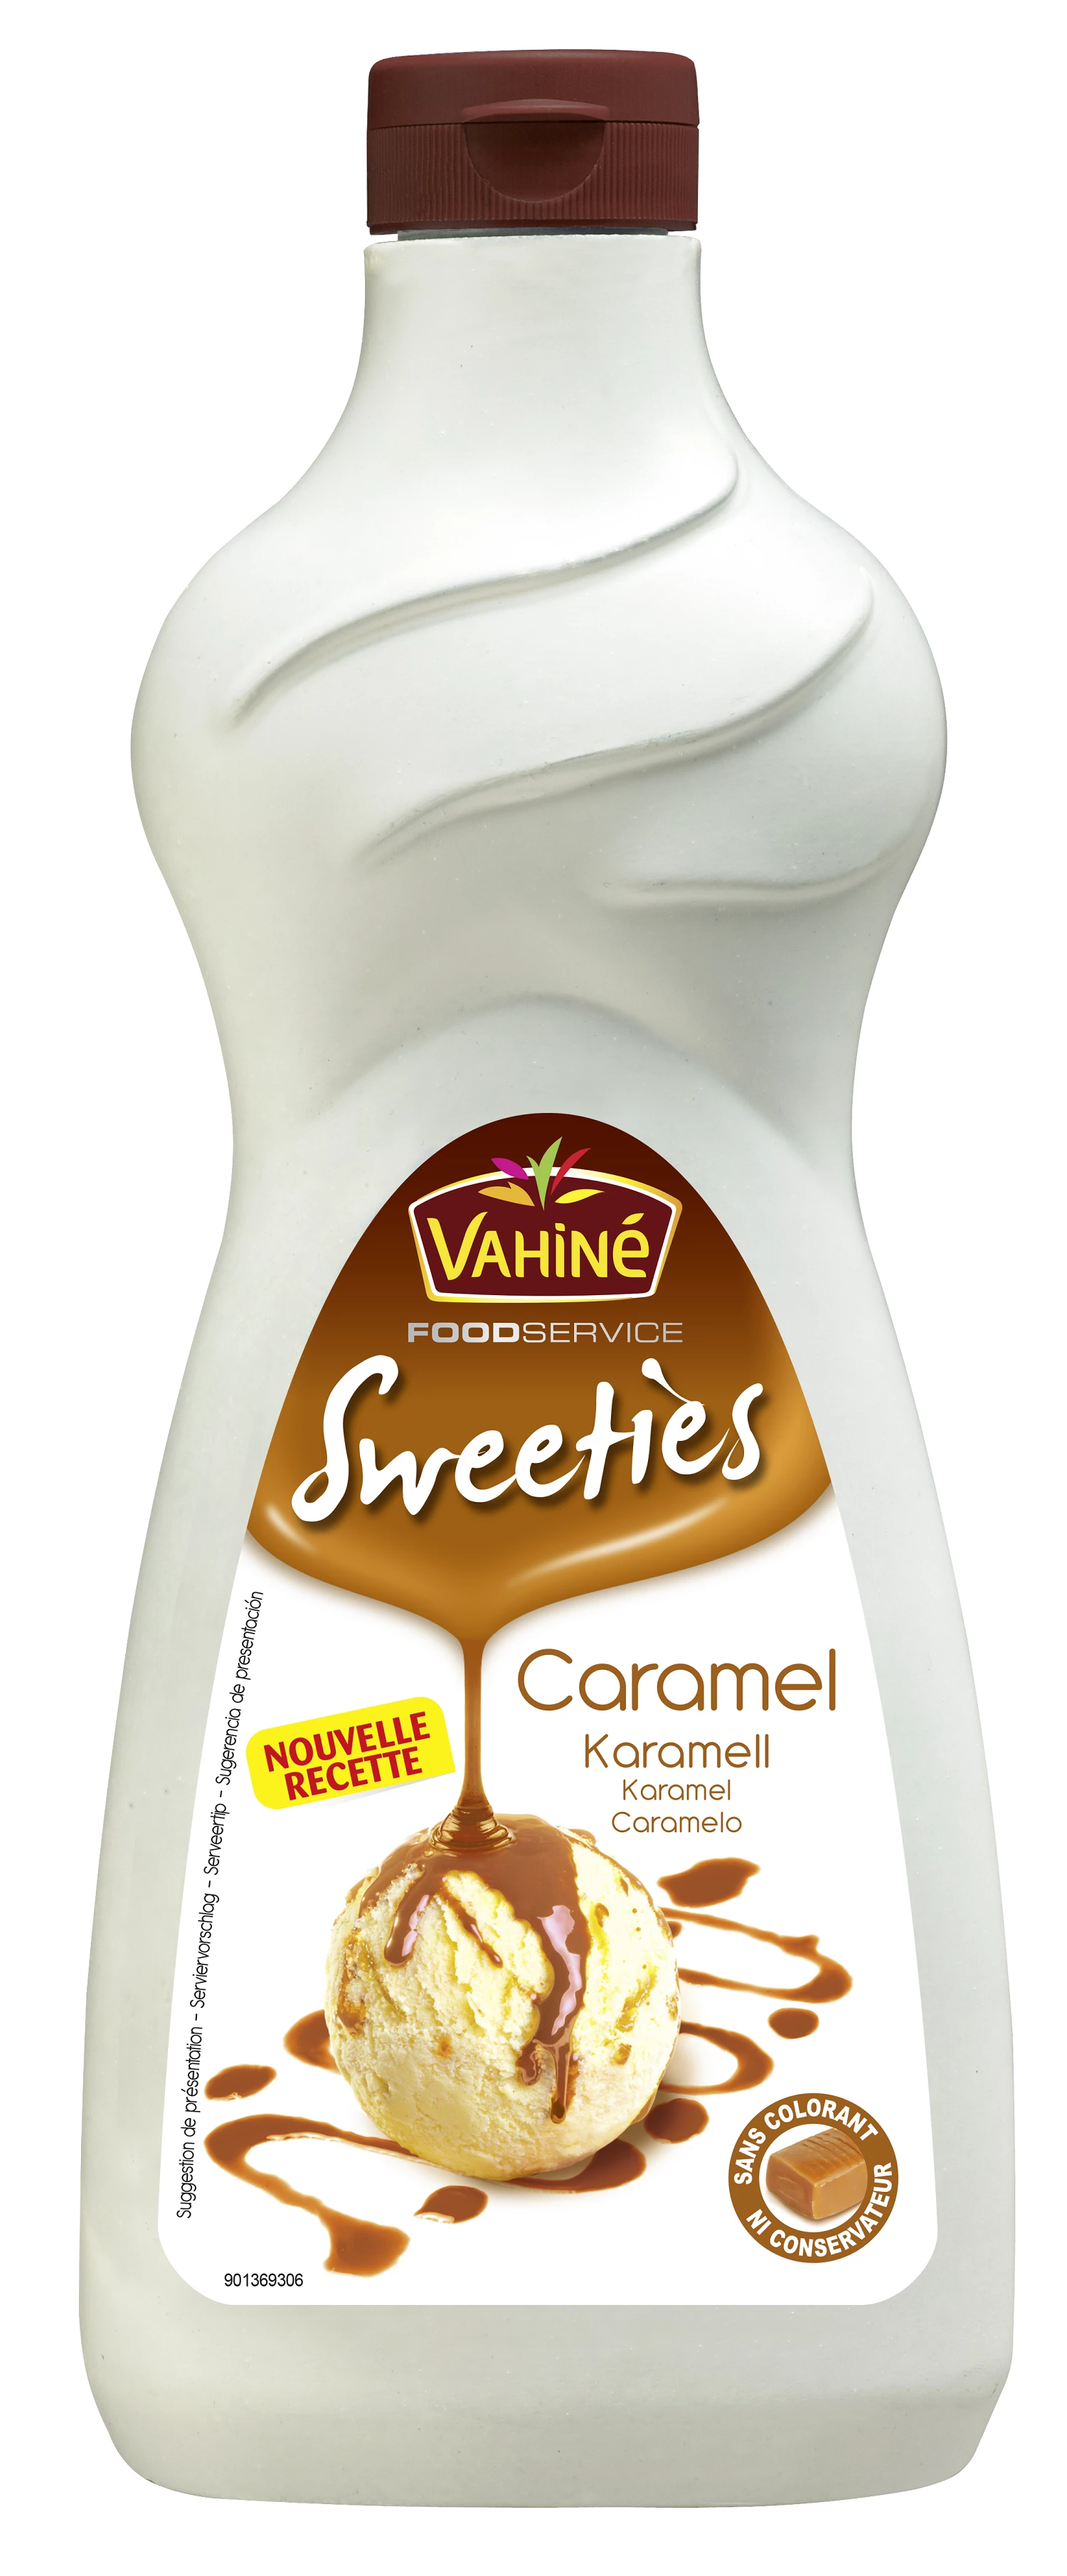 Vahine Sweeties Caramello 1kg